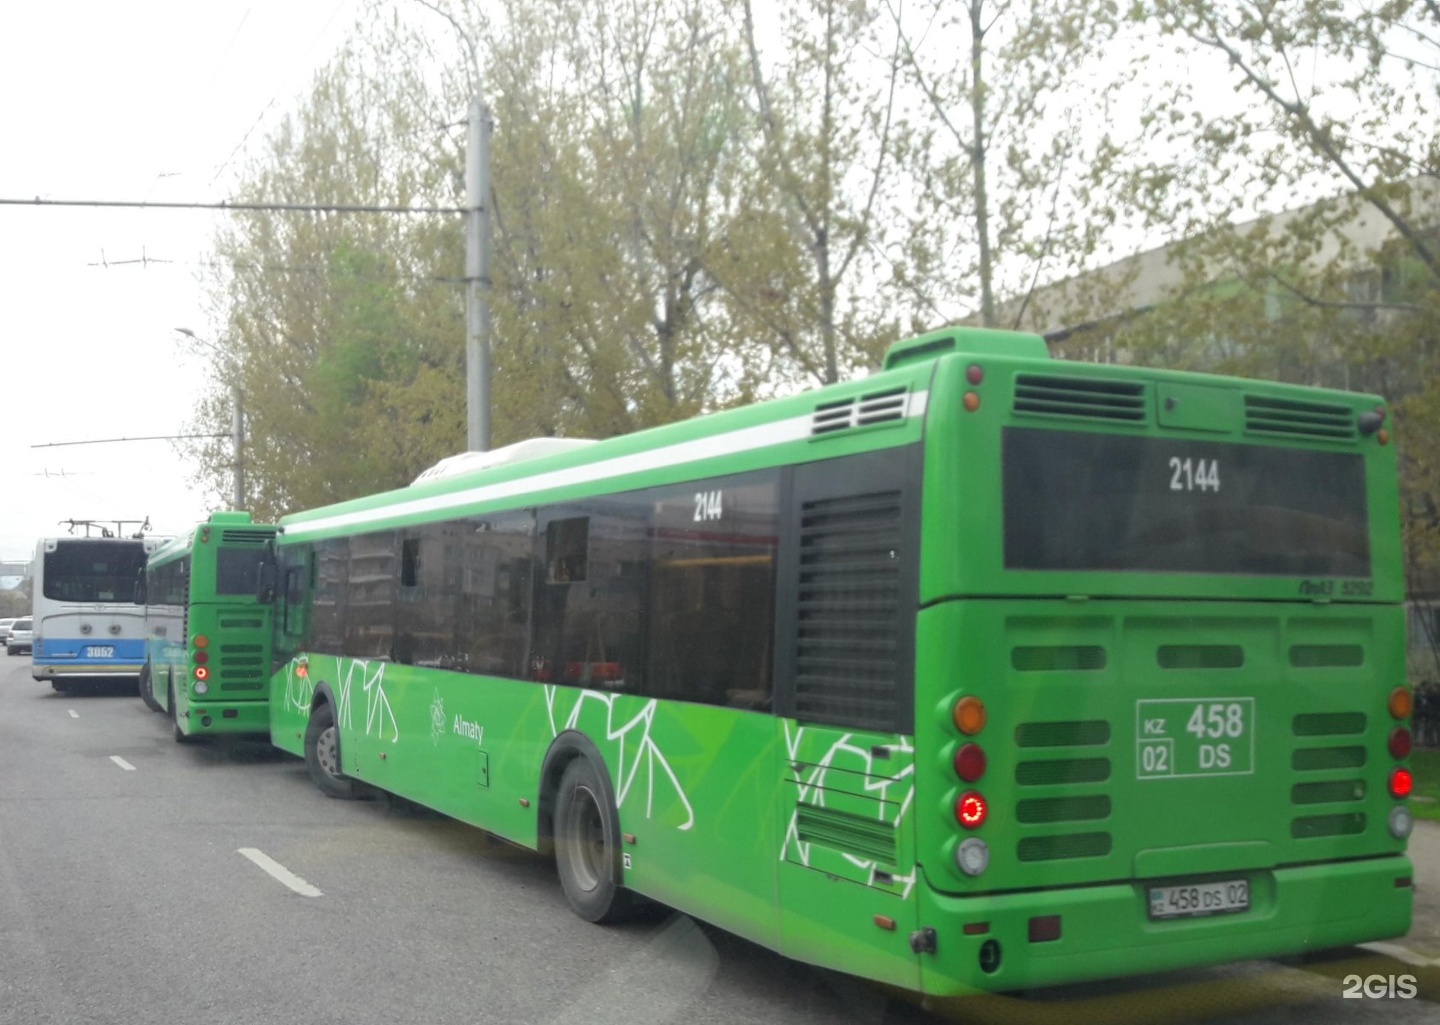 Маршрут 79 автобуса новосибирск